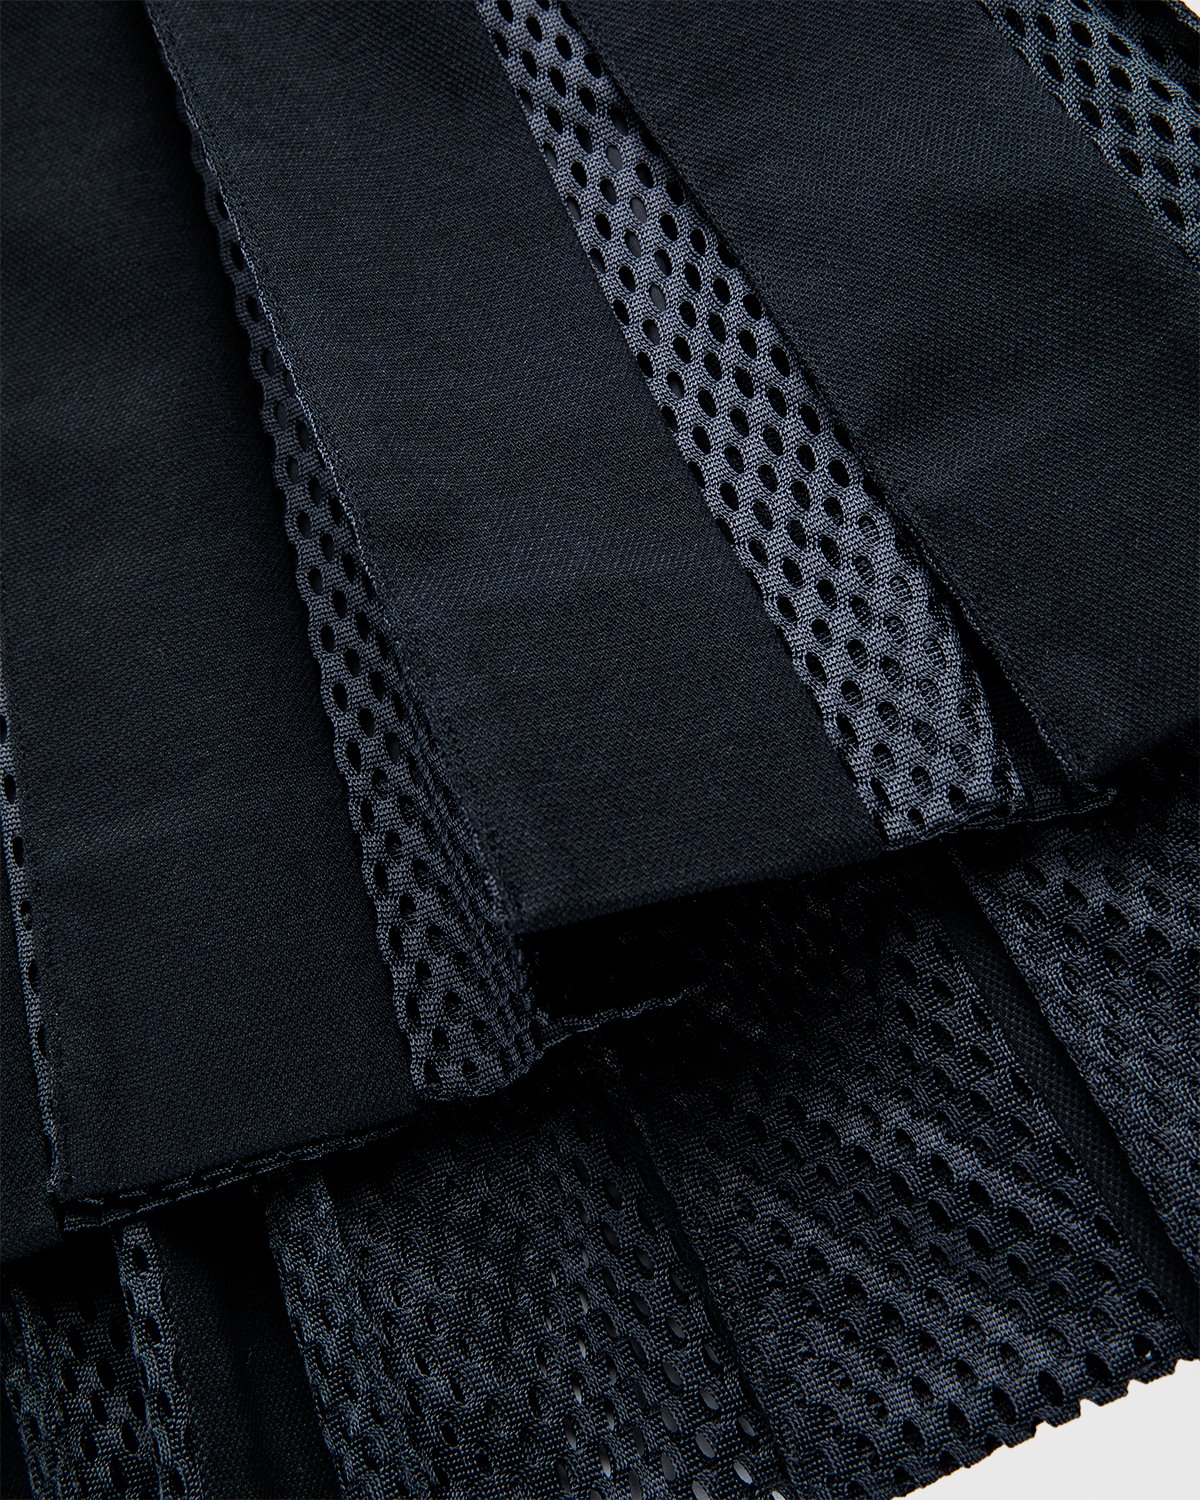 Thom Browne x Highsnobiety - Women’s Pleated Mesh Skirt Black - Clothing - Black - Image 6